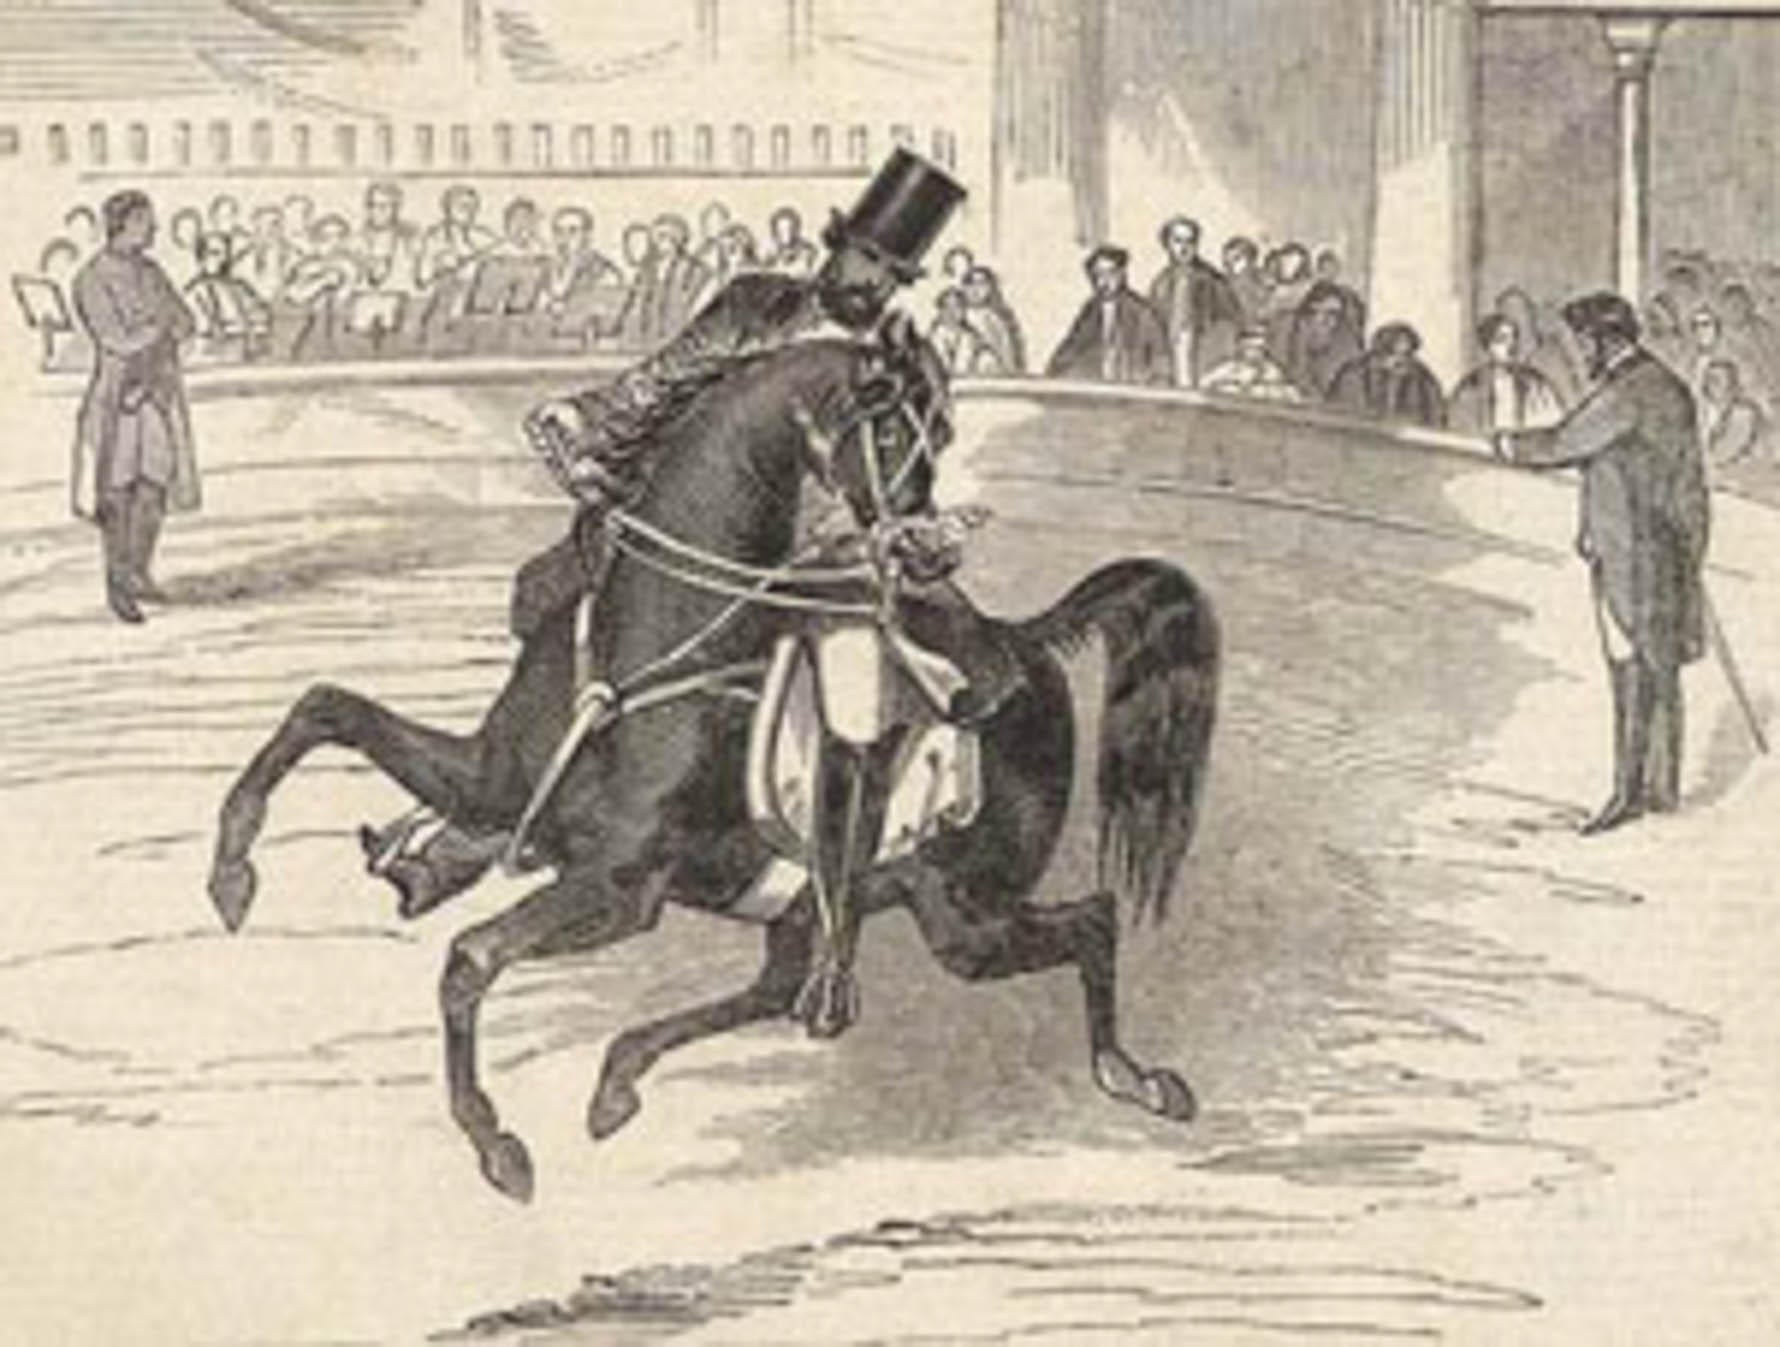 Pablo Fanque performing at Astley’s Amphitheatre, 1847